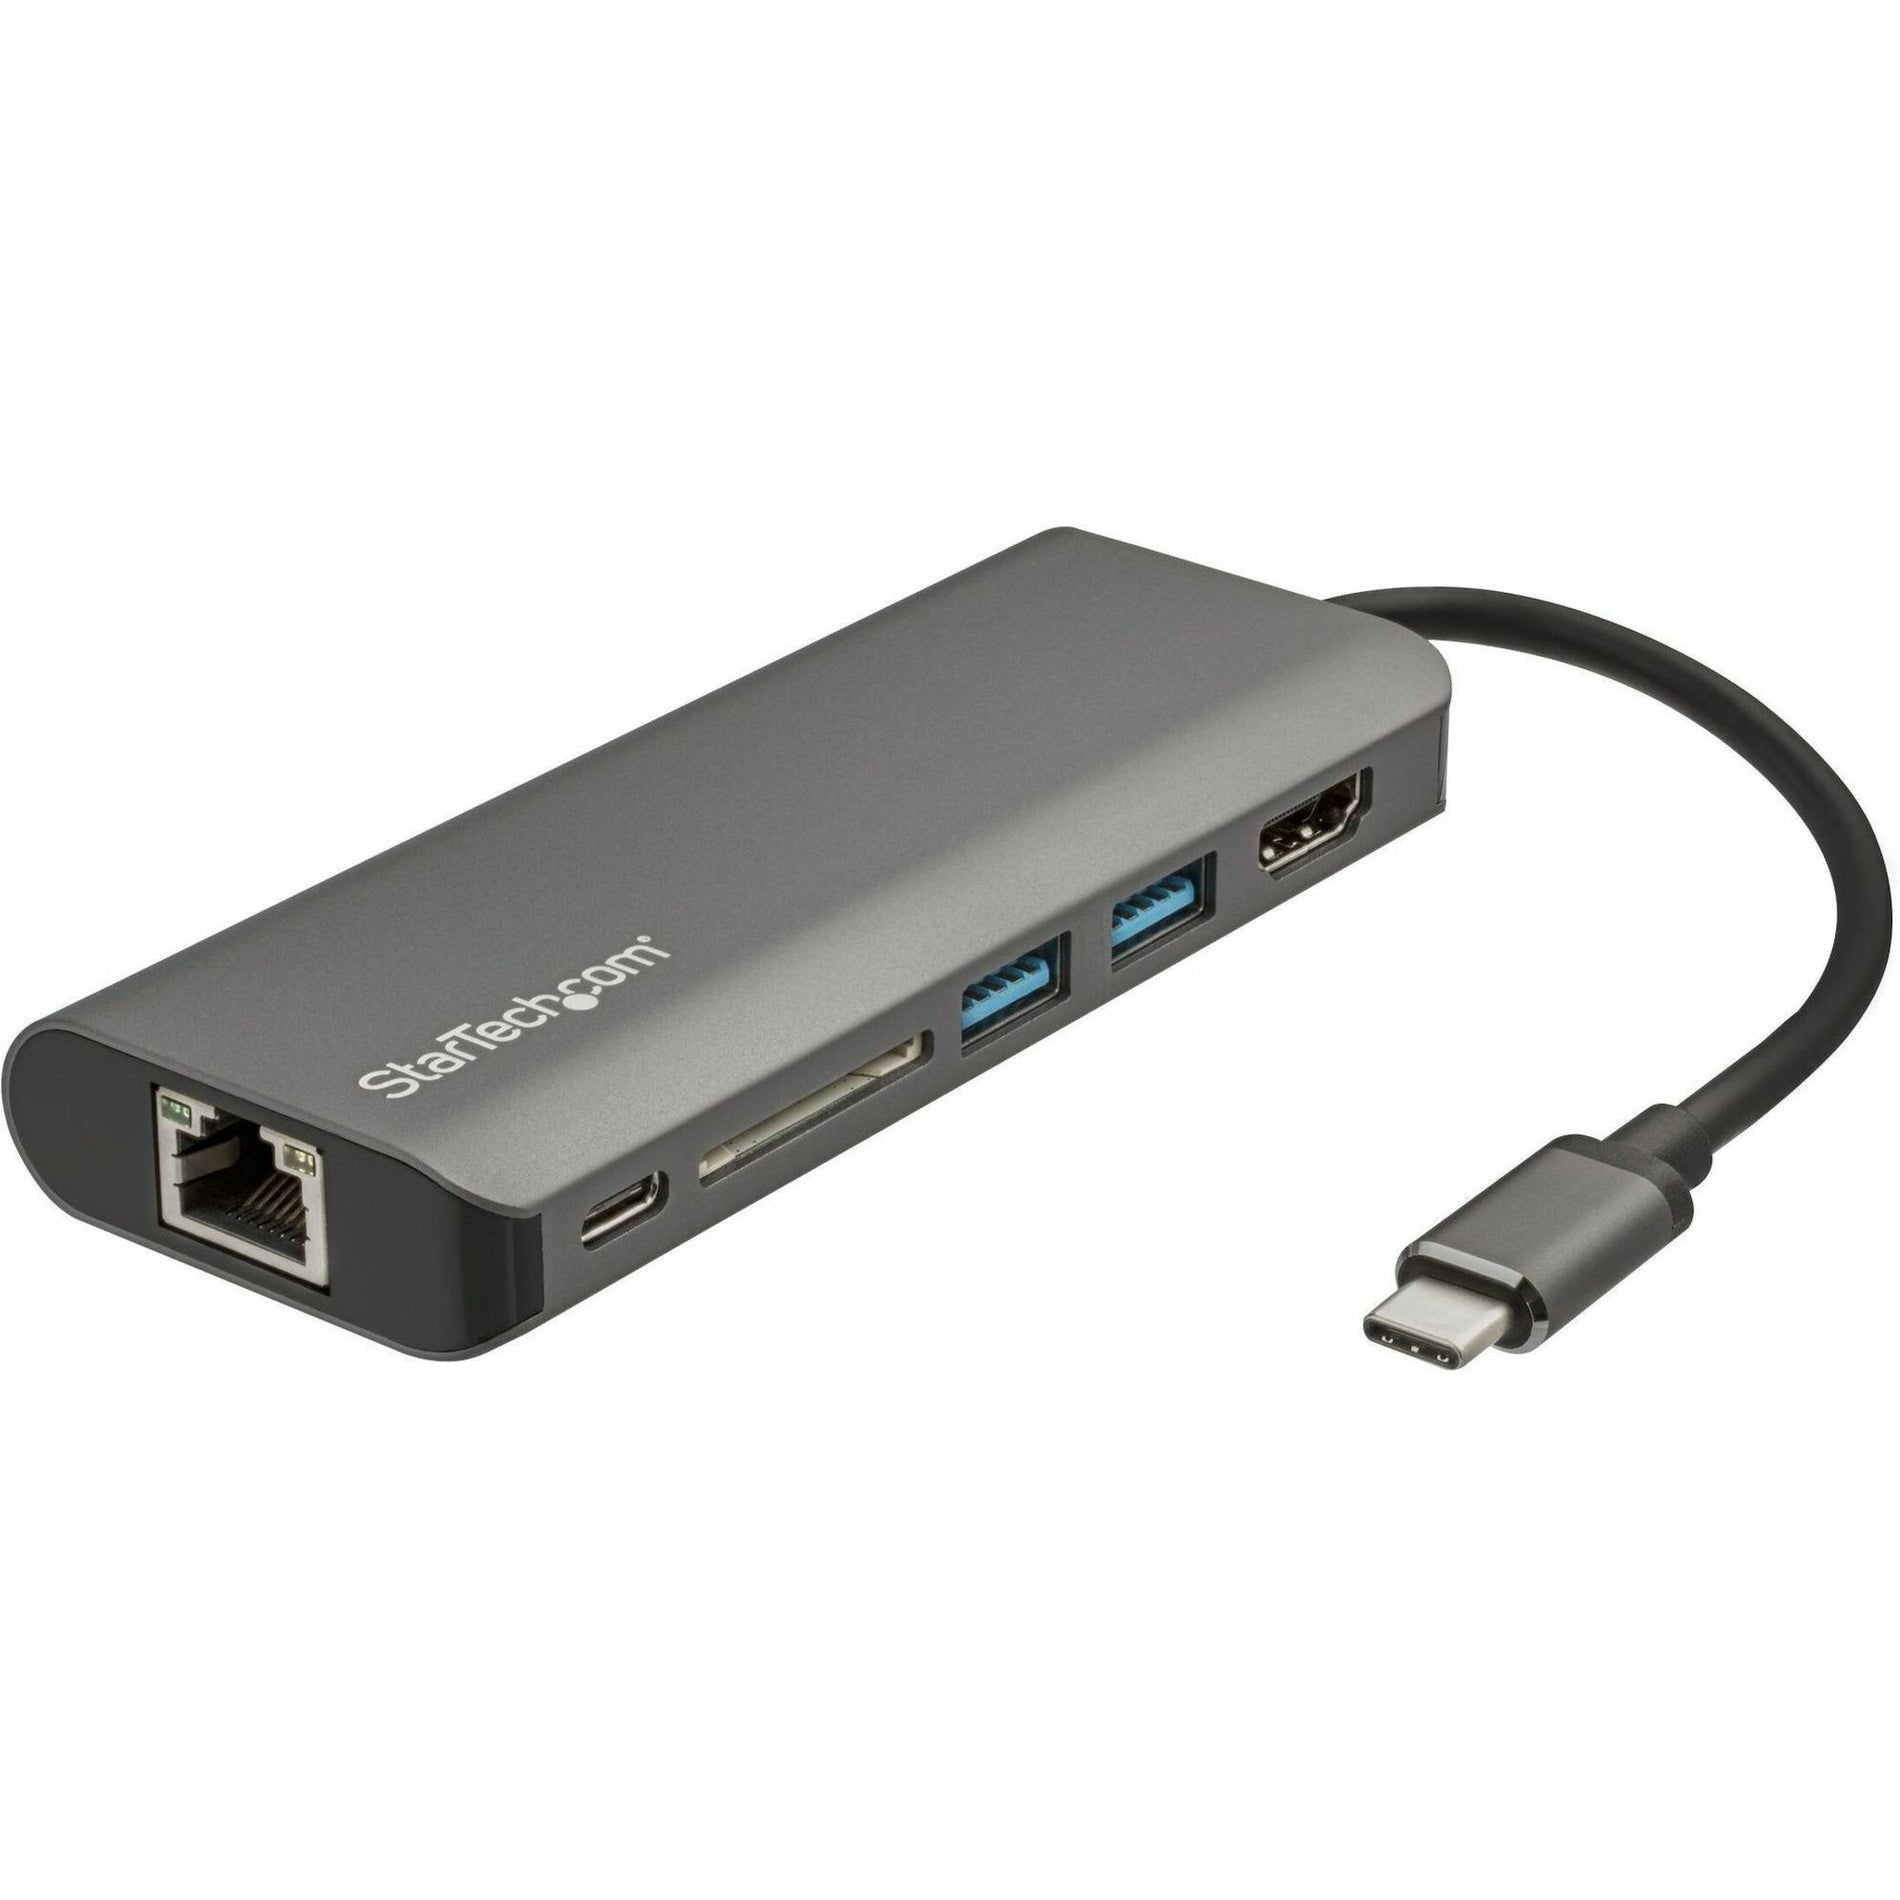 StarTech.com DKT30CSDHPD3 USB-C Multiport Adapter with HDMI - SD Reader - PD 3.0, 4K Display, Gigabit Ethernet